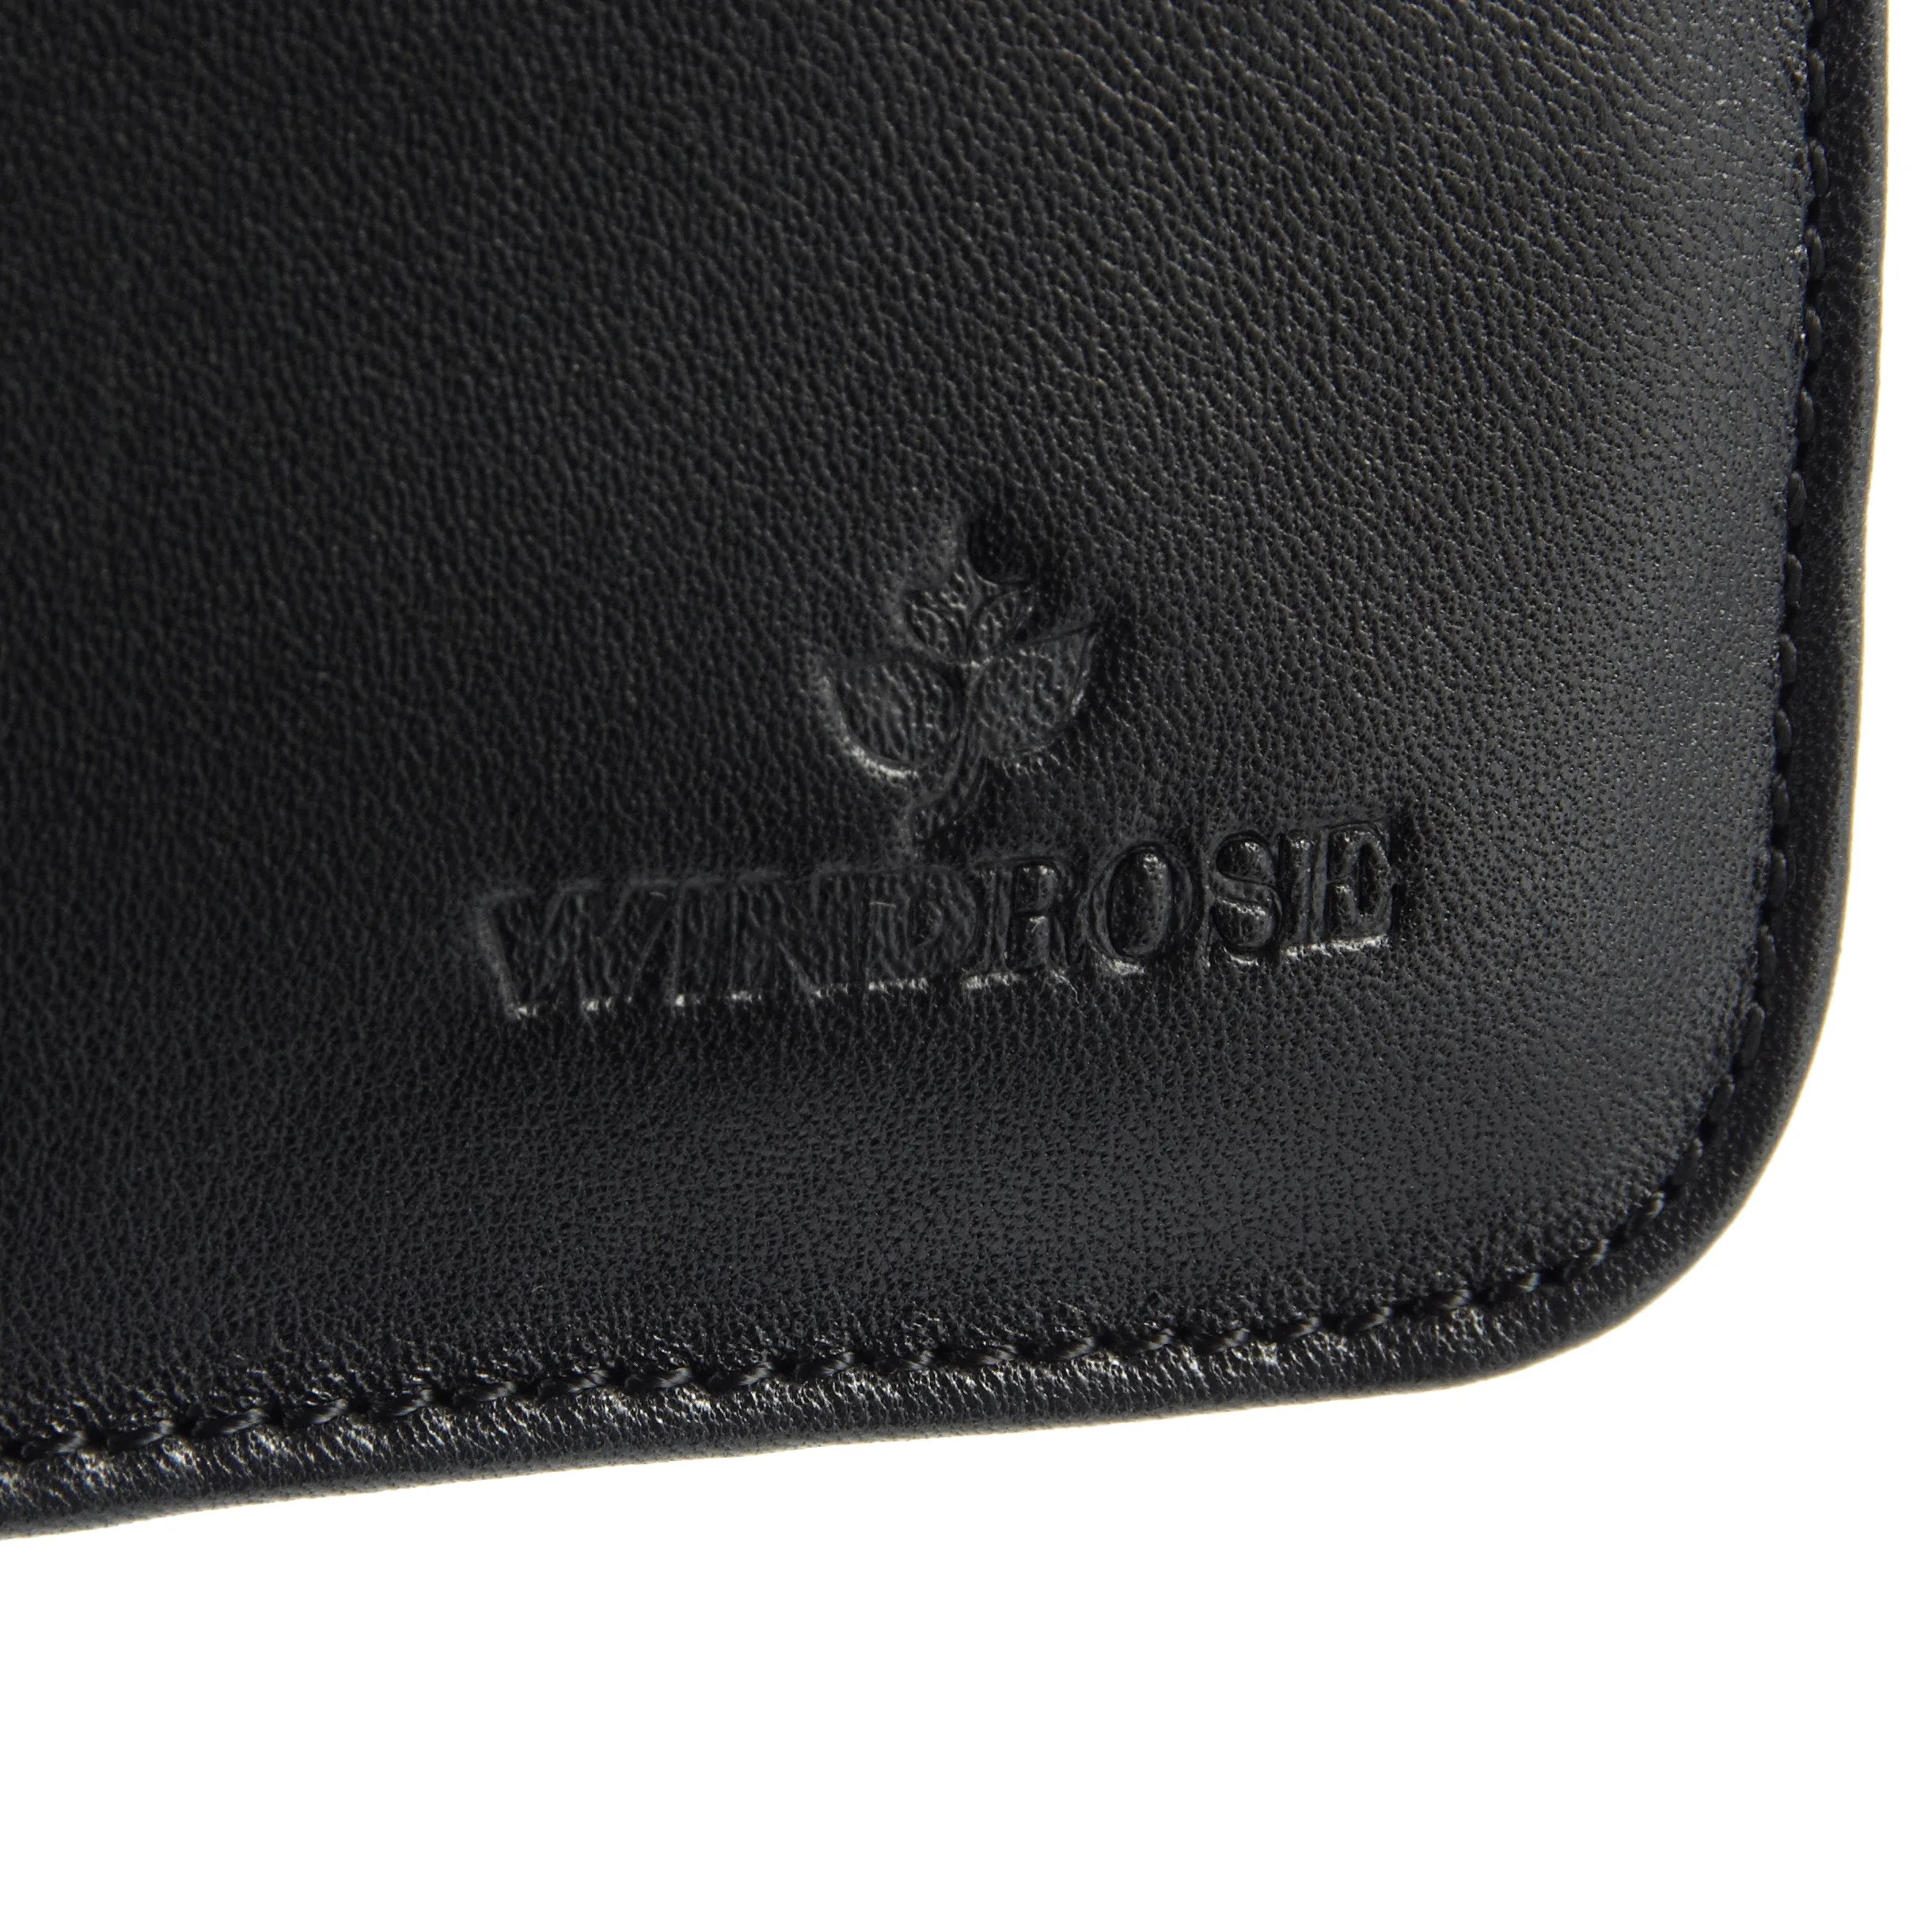 Windrose Nappa Manicure zipper case 15 cm - black